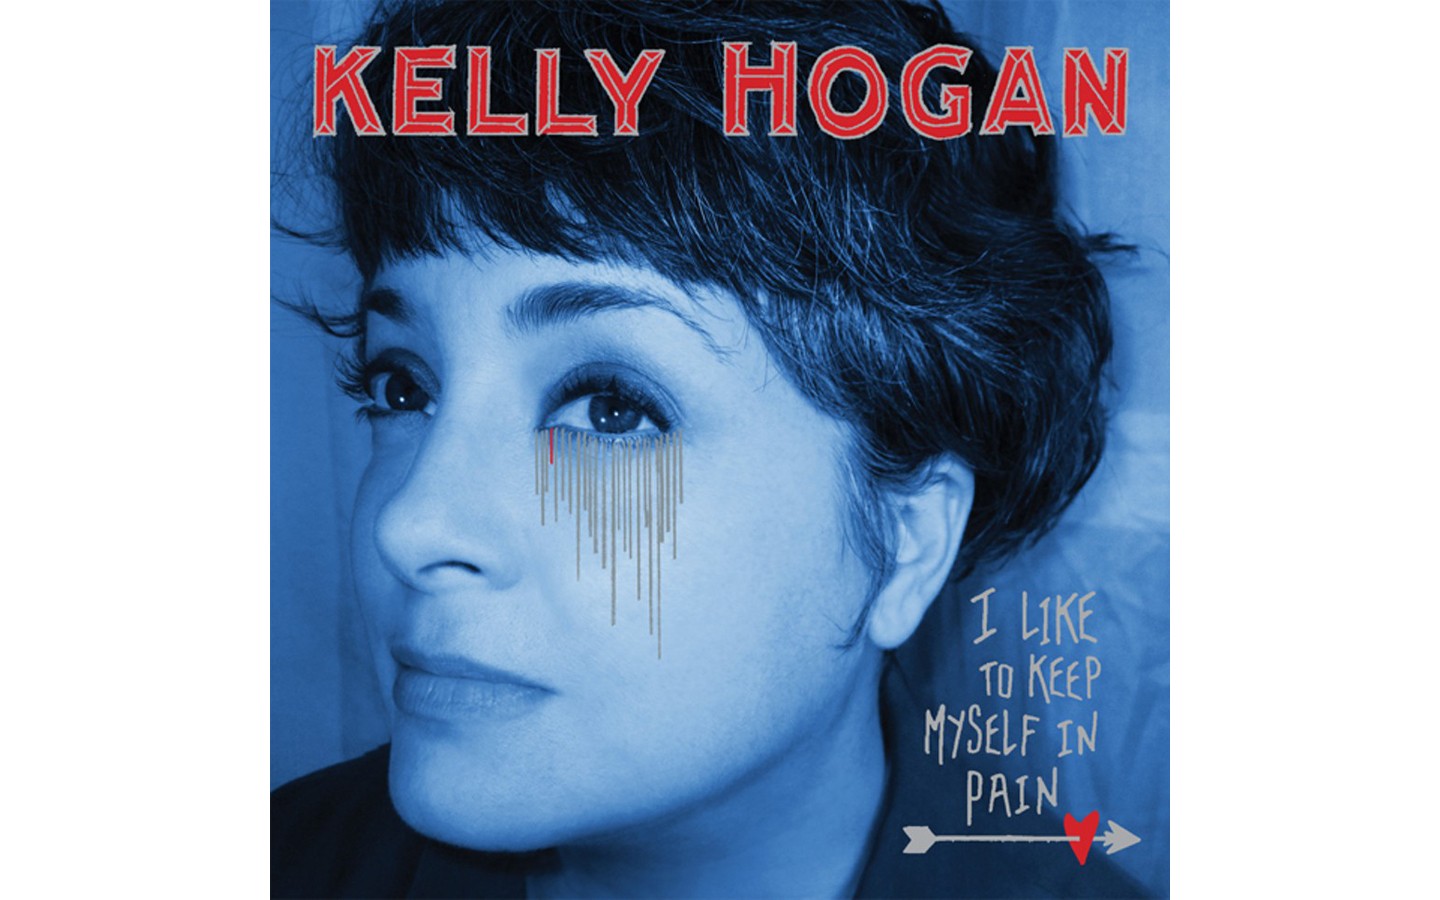 I Like to Keep Myself in Pain - BY KELLY HOGAN - ANTI-